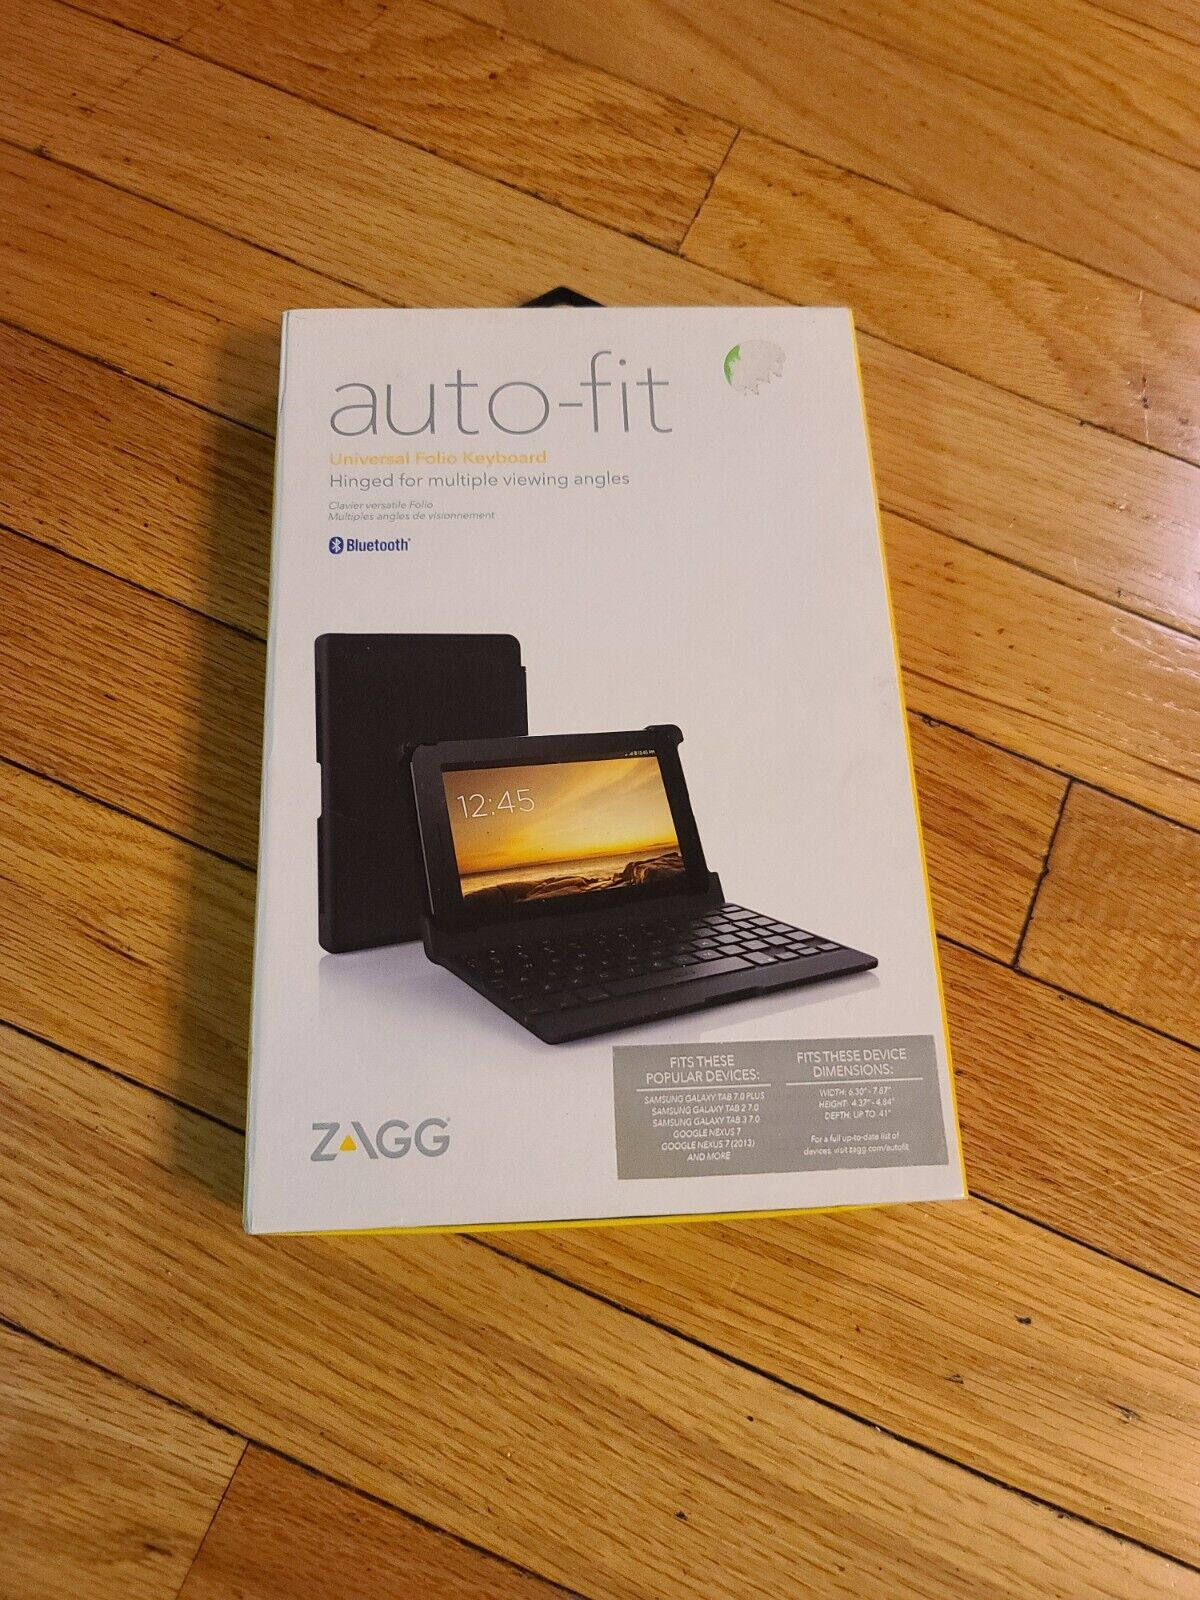 Zagg auto fit universal folio keyboard with bluetooth